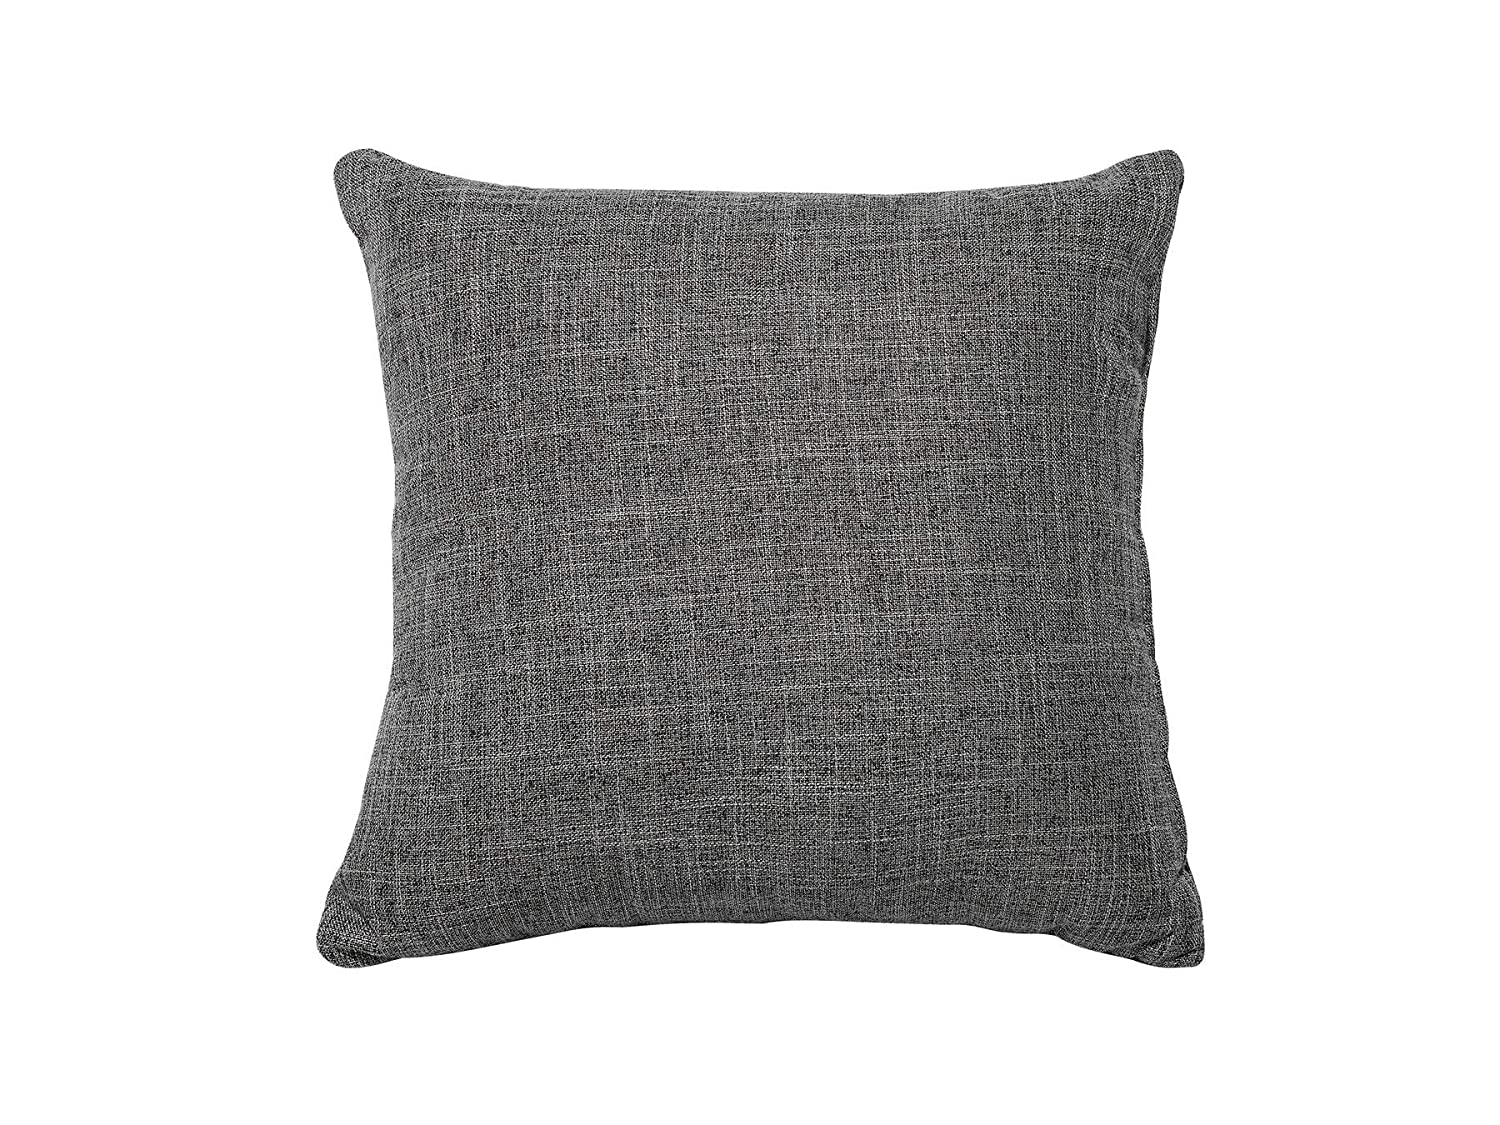 3 Seater Sofa:- Alden Fabric Sofa Set (Light Grey)